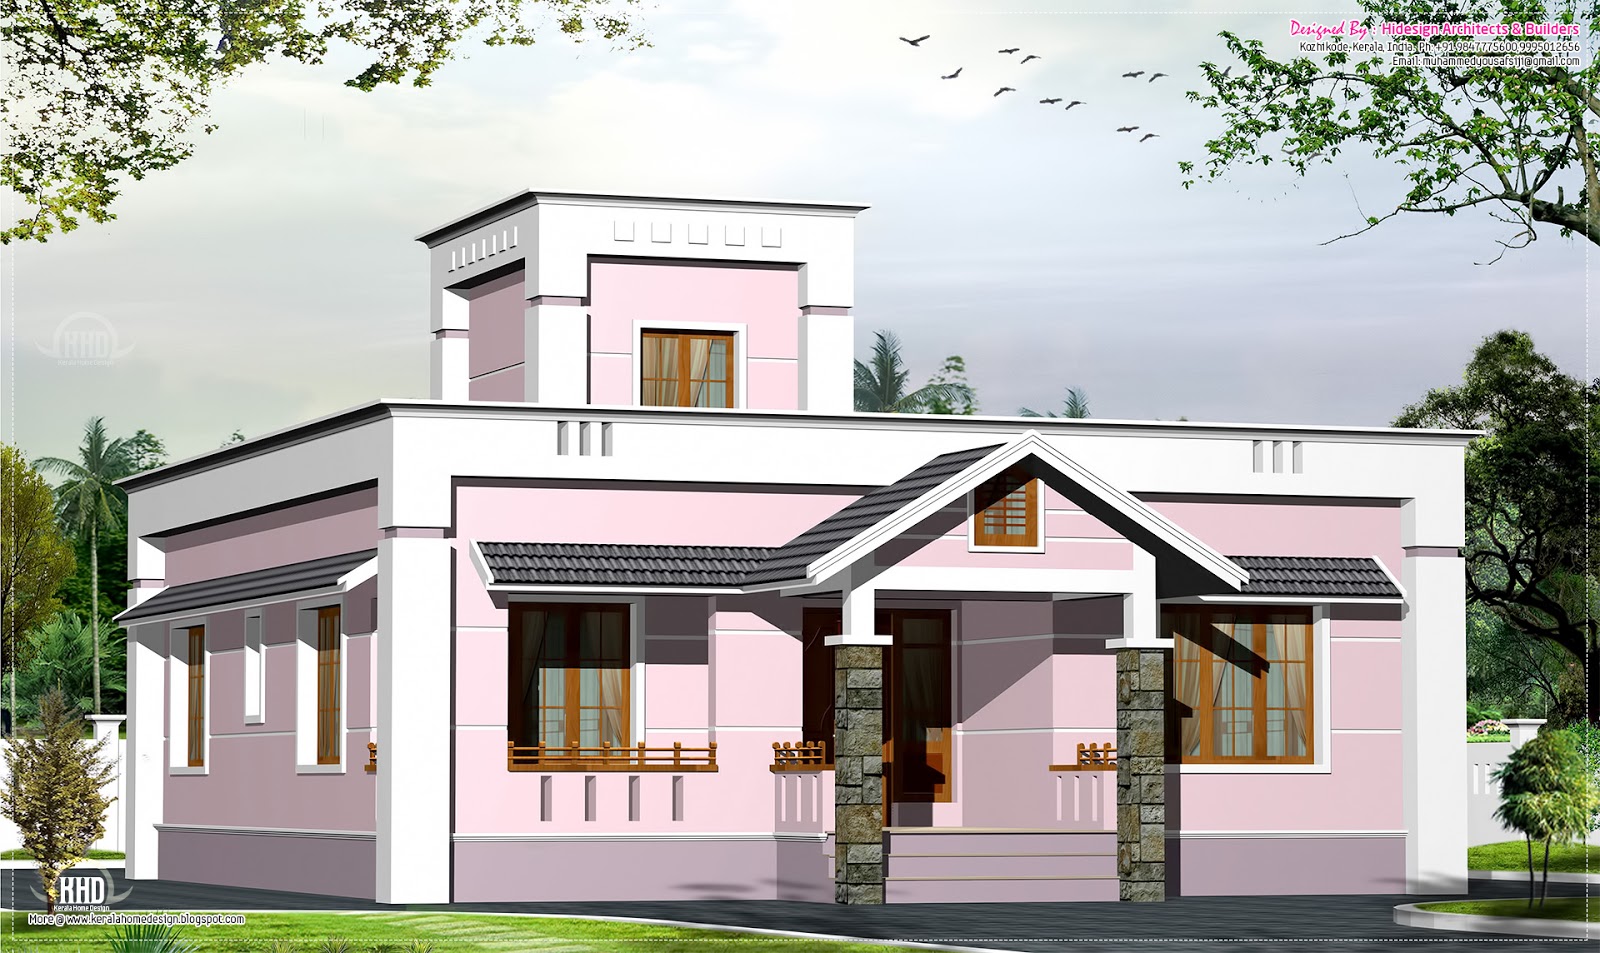  1000  sq  feet  small budget villa plan  Kerala  home  design  